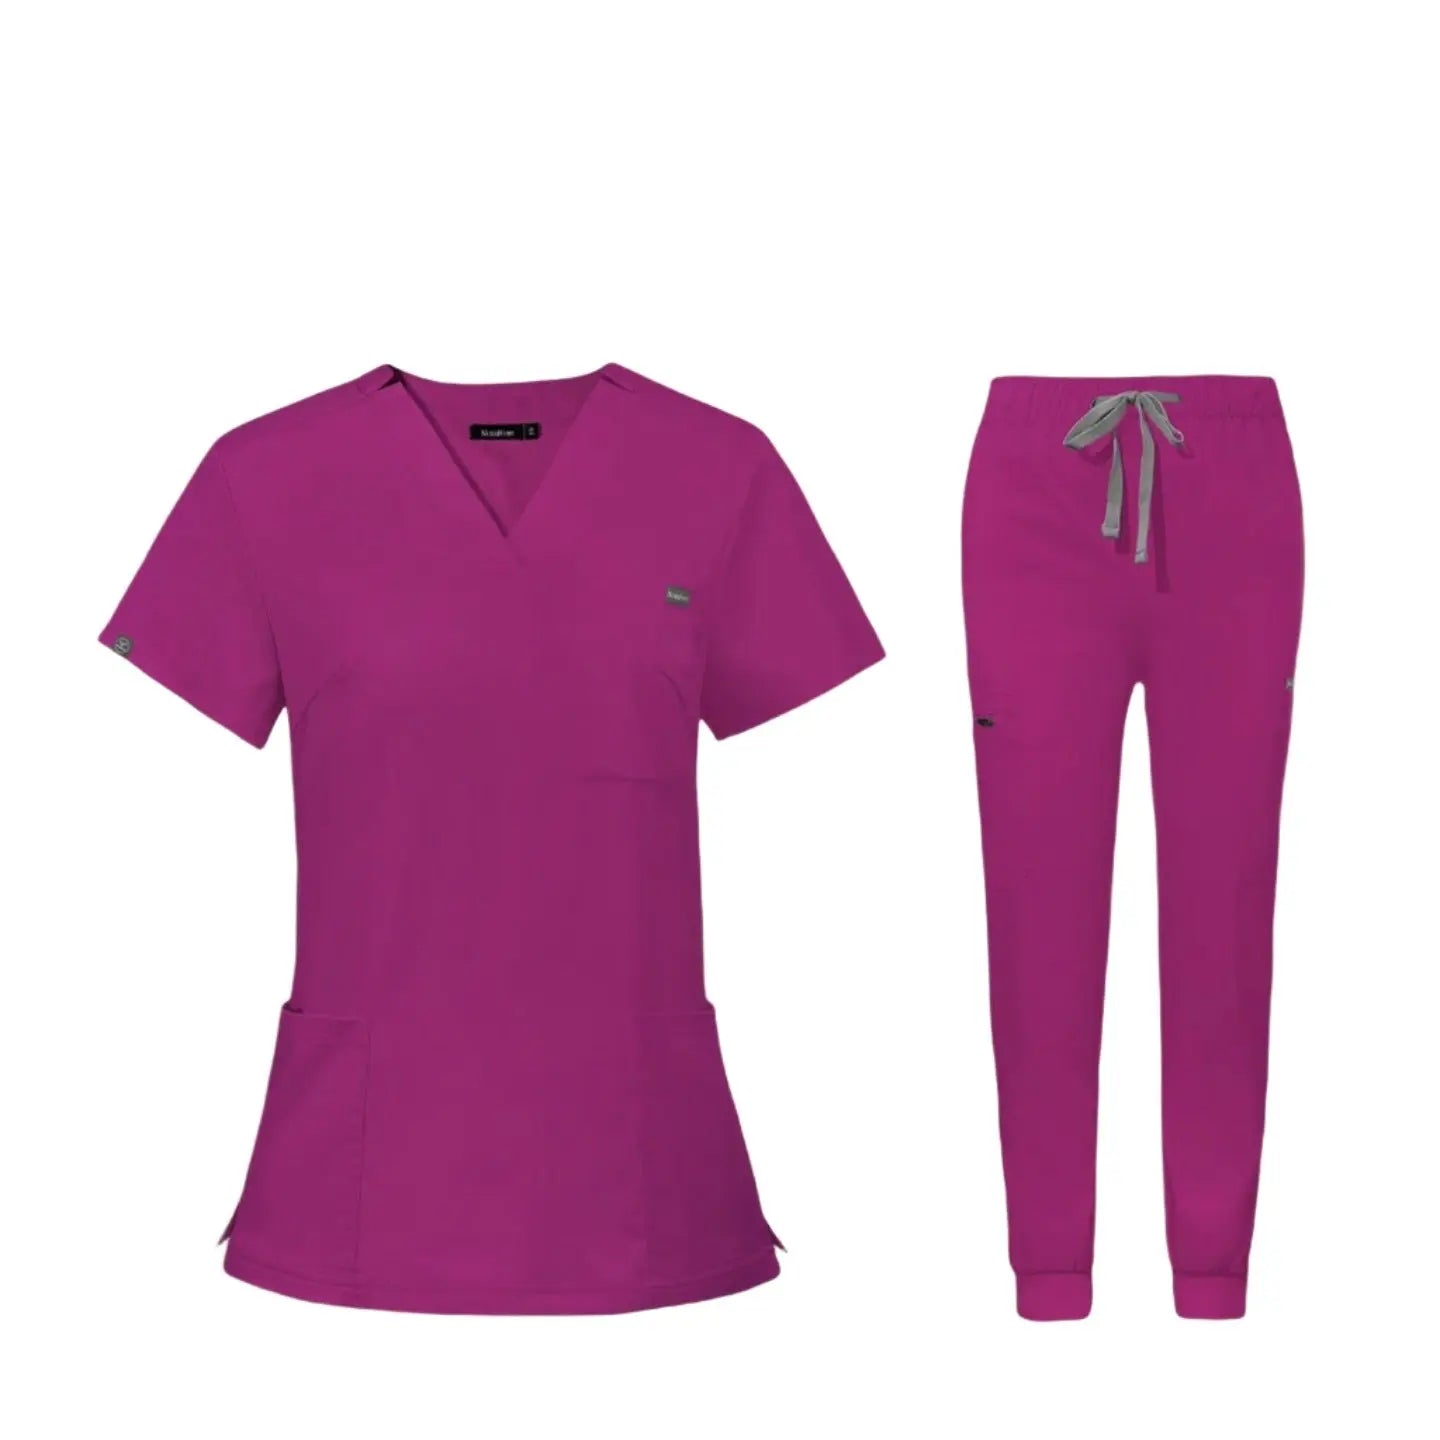 Modern Fit Nurse Attire: Modern Style, Tailored Comfort My Store